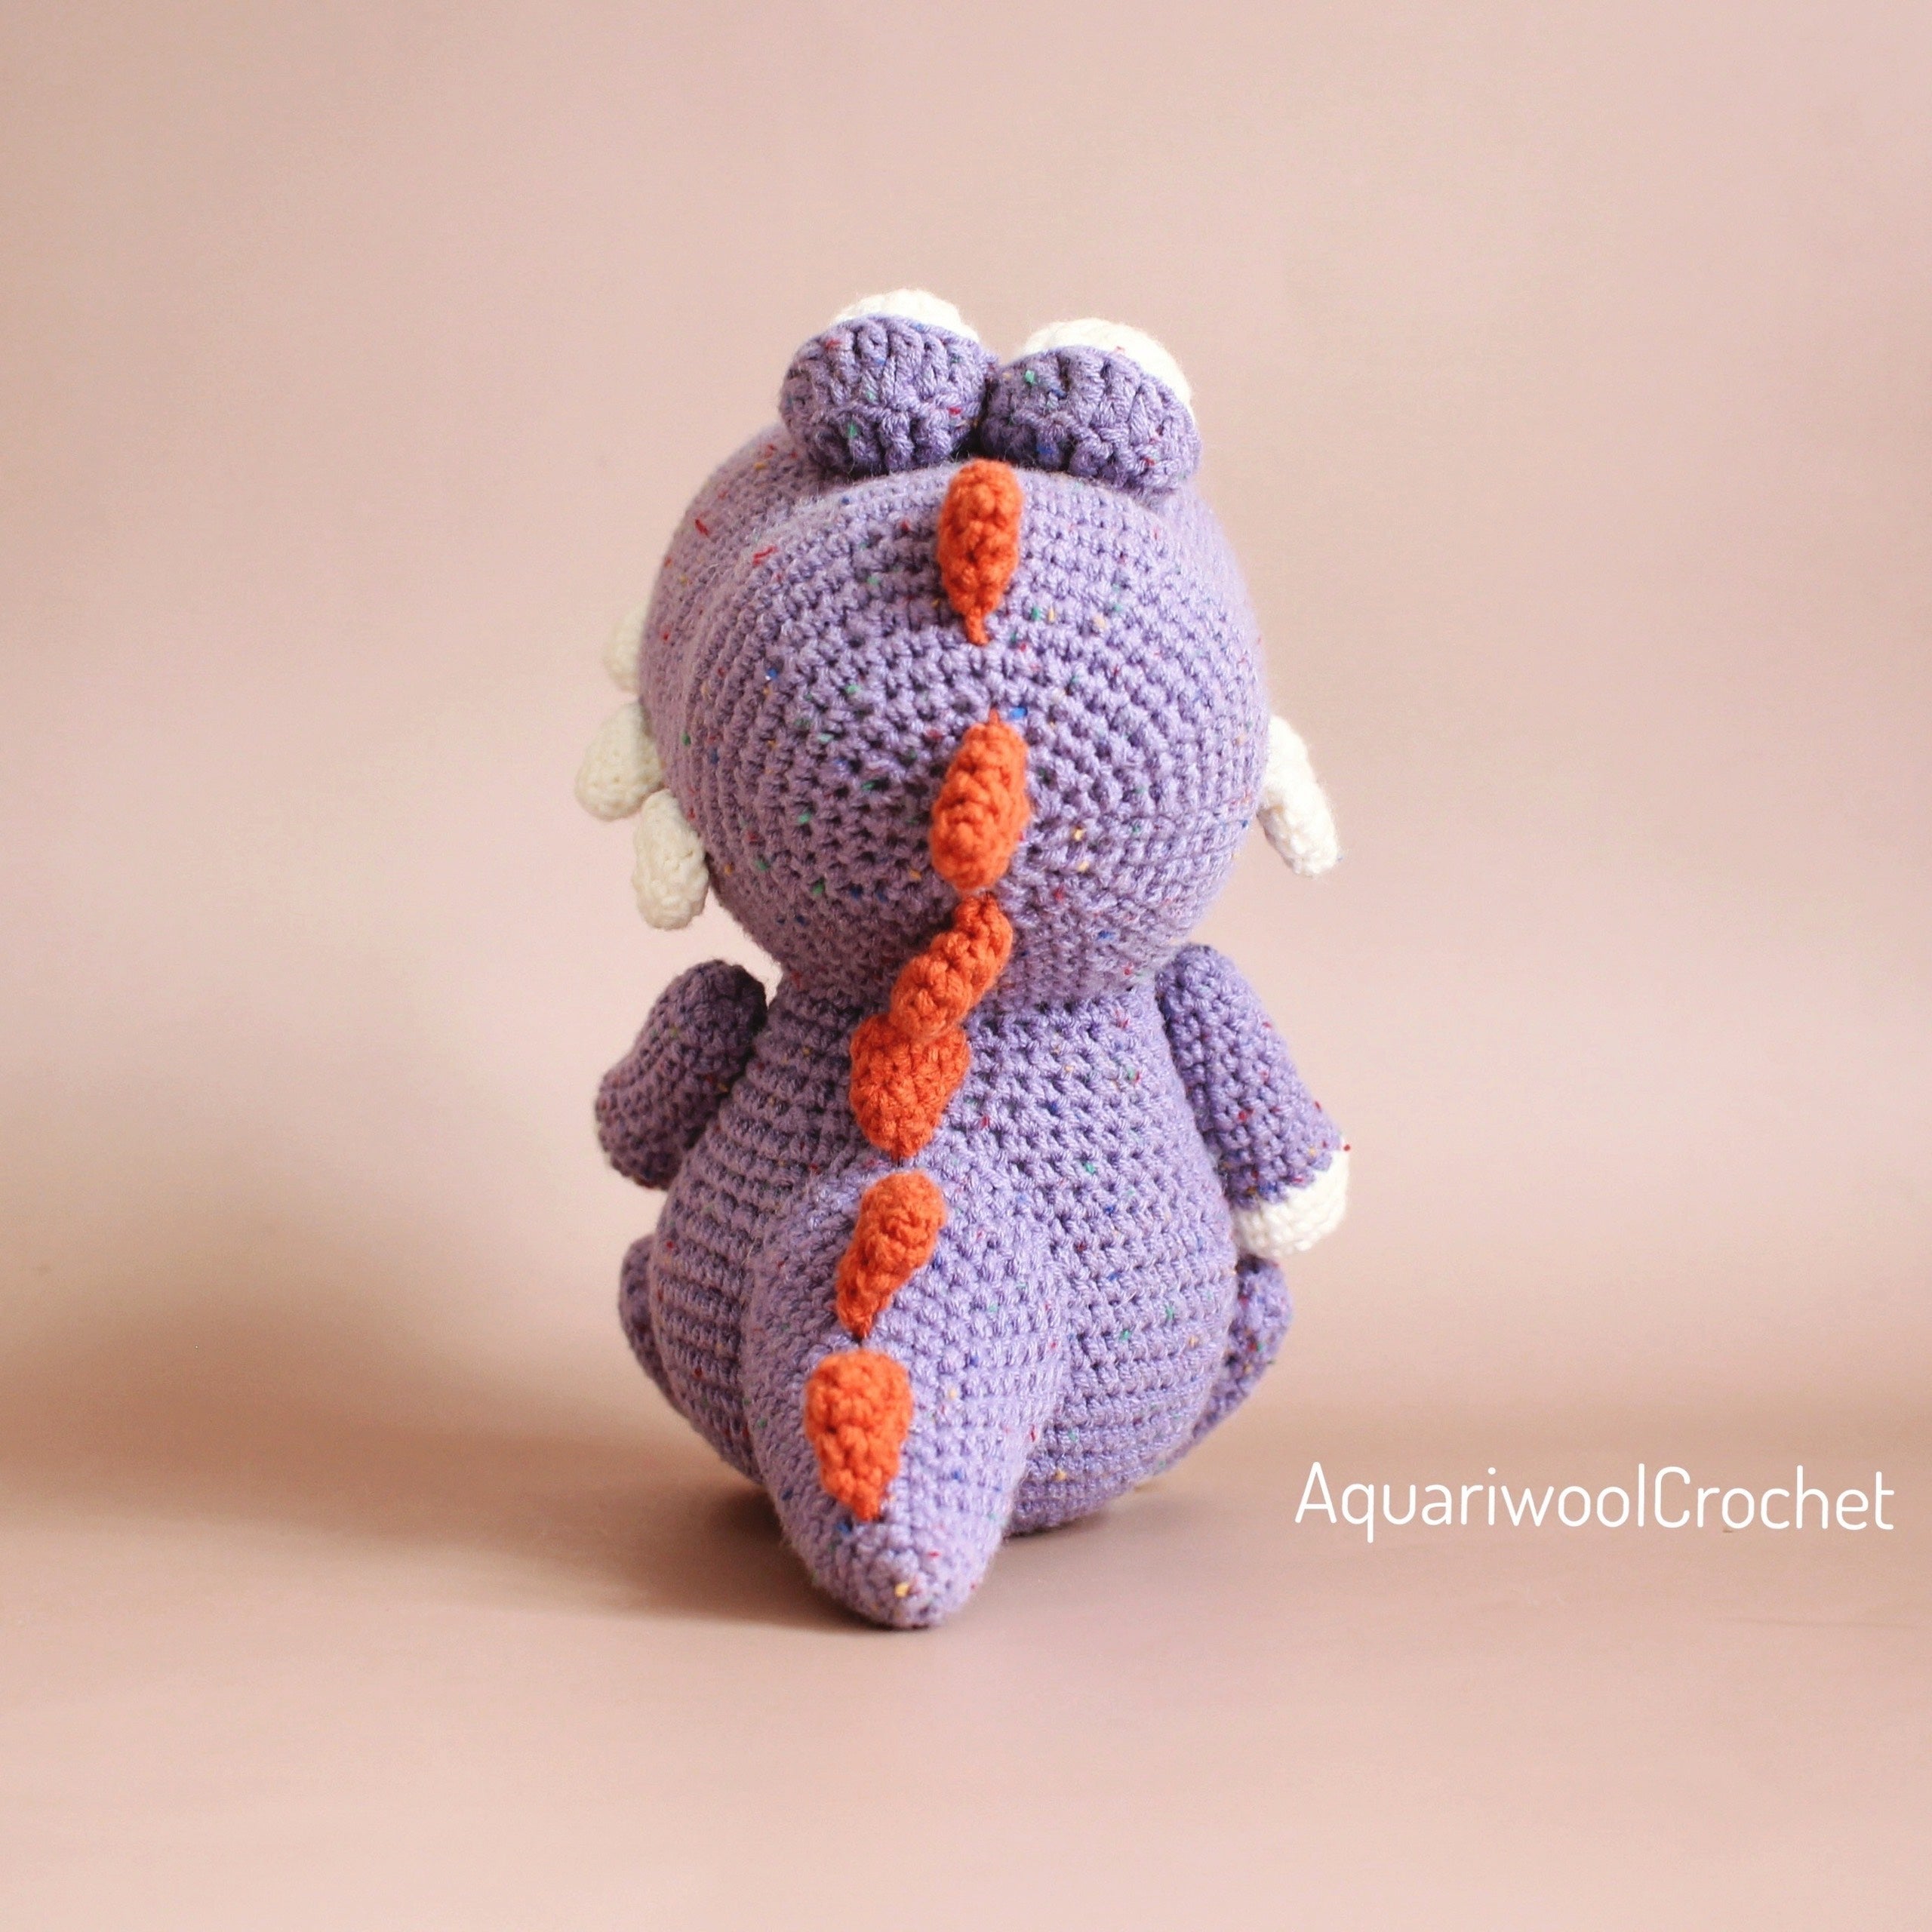 Dino The Dinosaur Crochet Pattern by Aquariwool (Crochet Doll Pattern/Amigurumi Pattern for Baby gift)